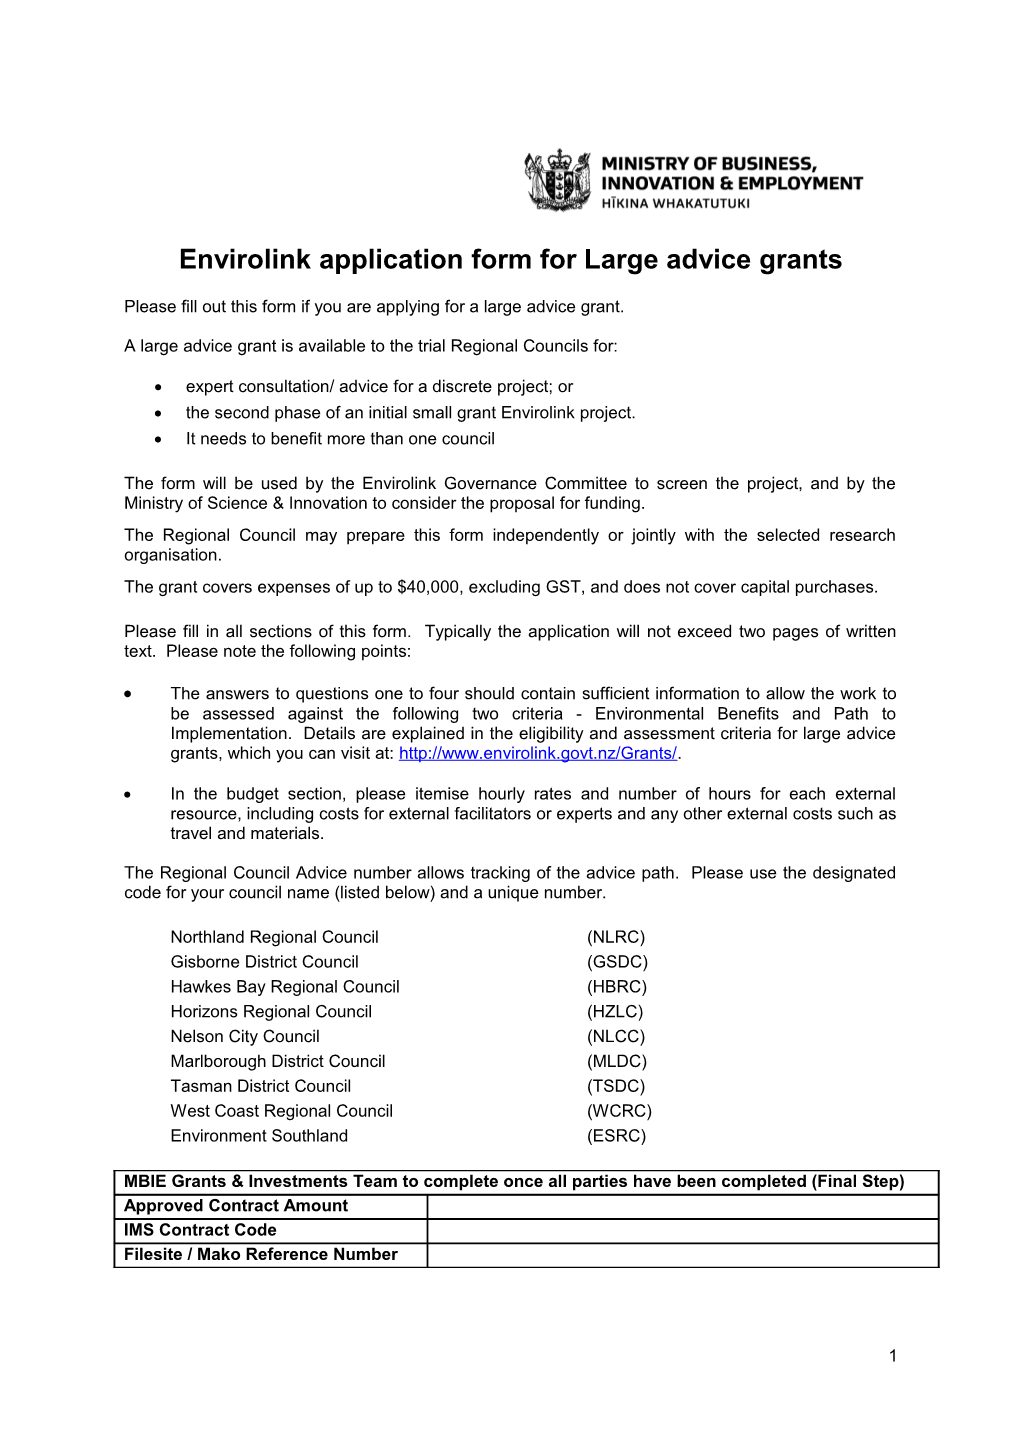 Envirolink Application Form for Large Advice Grants